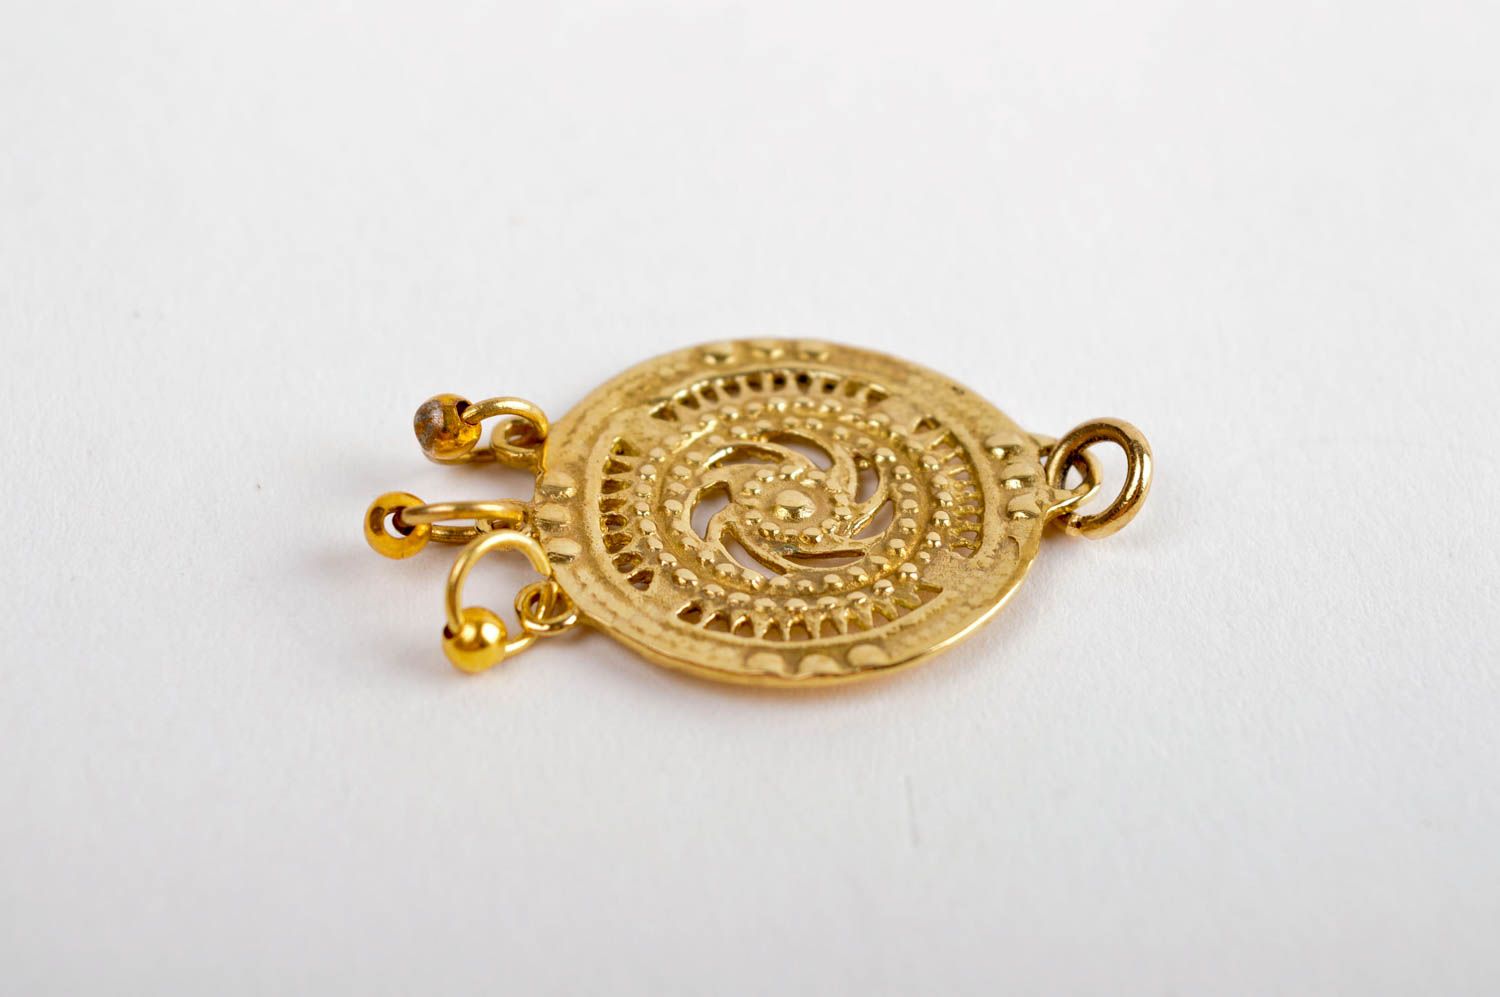 Handmade metal jewelry designer brass accessory stylish designer pendant photo 3